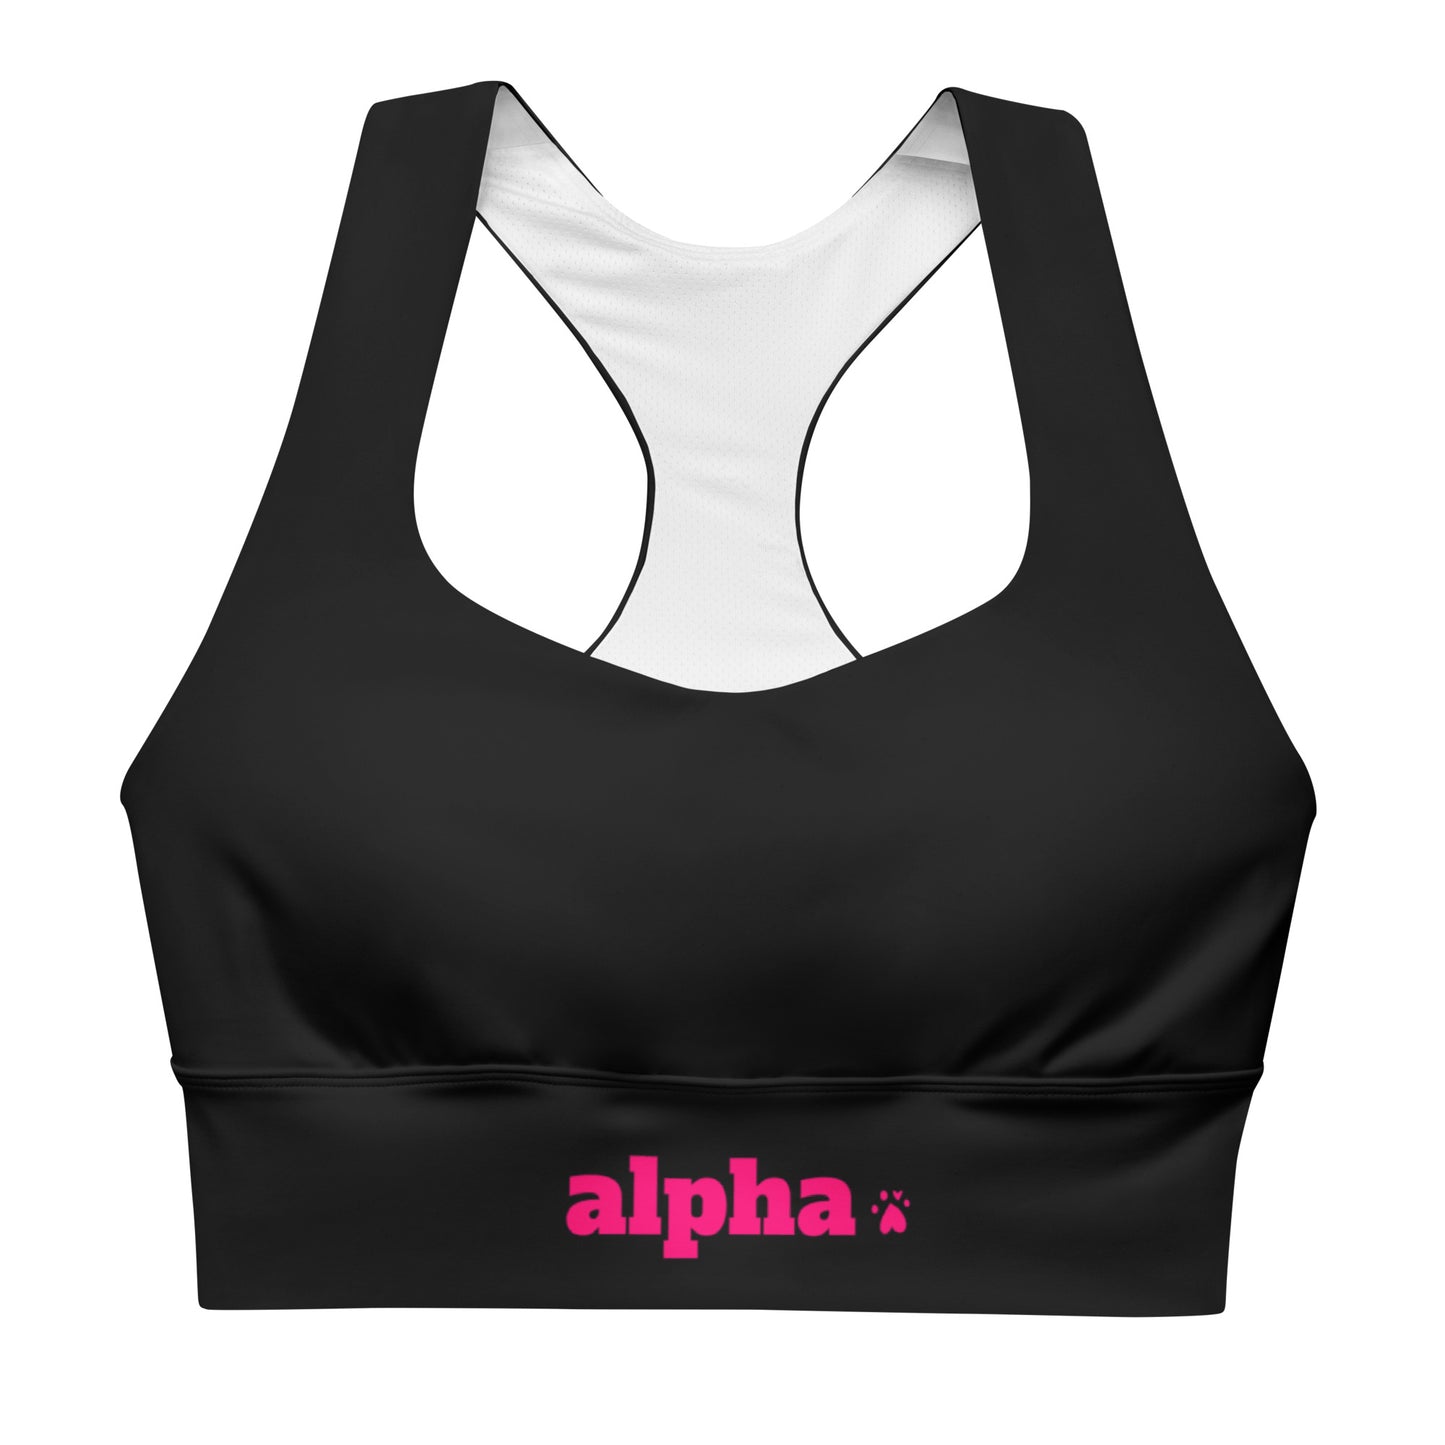 Alpha - Black & Pink - Longline Sports Bra